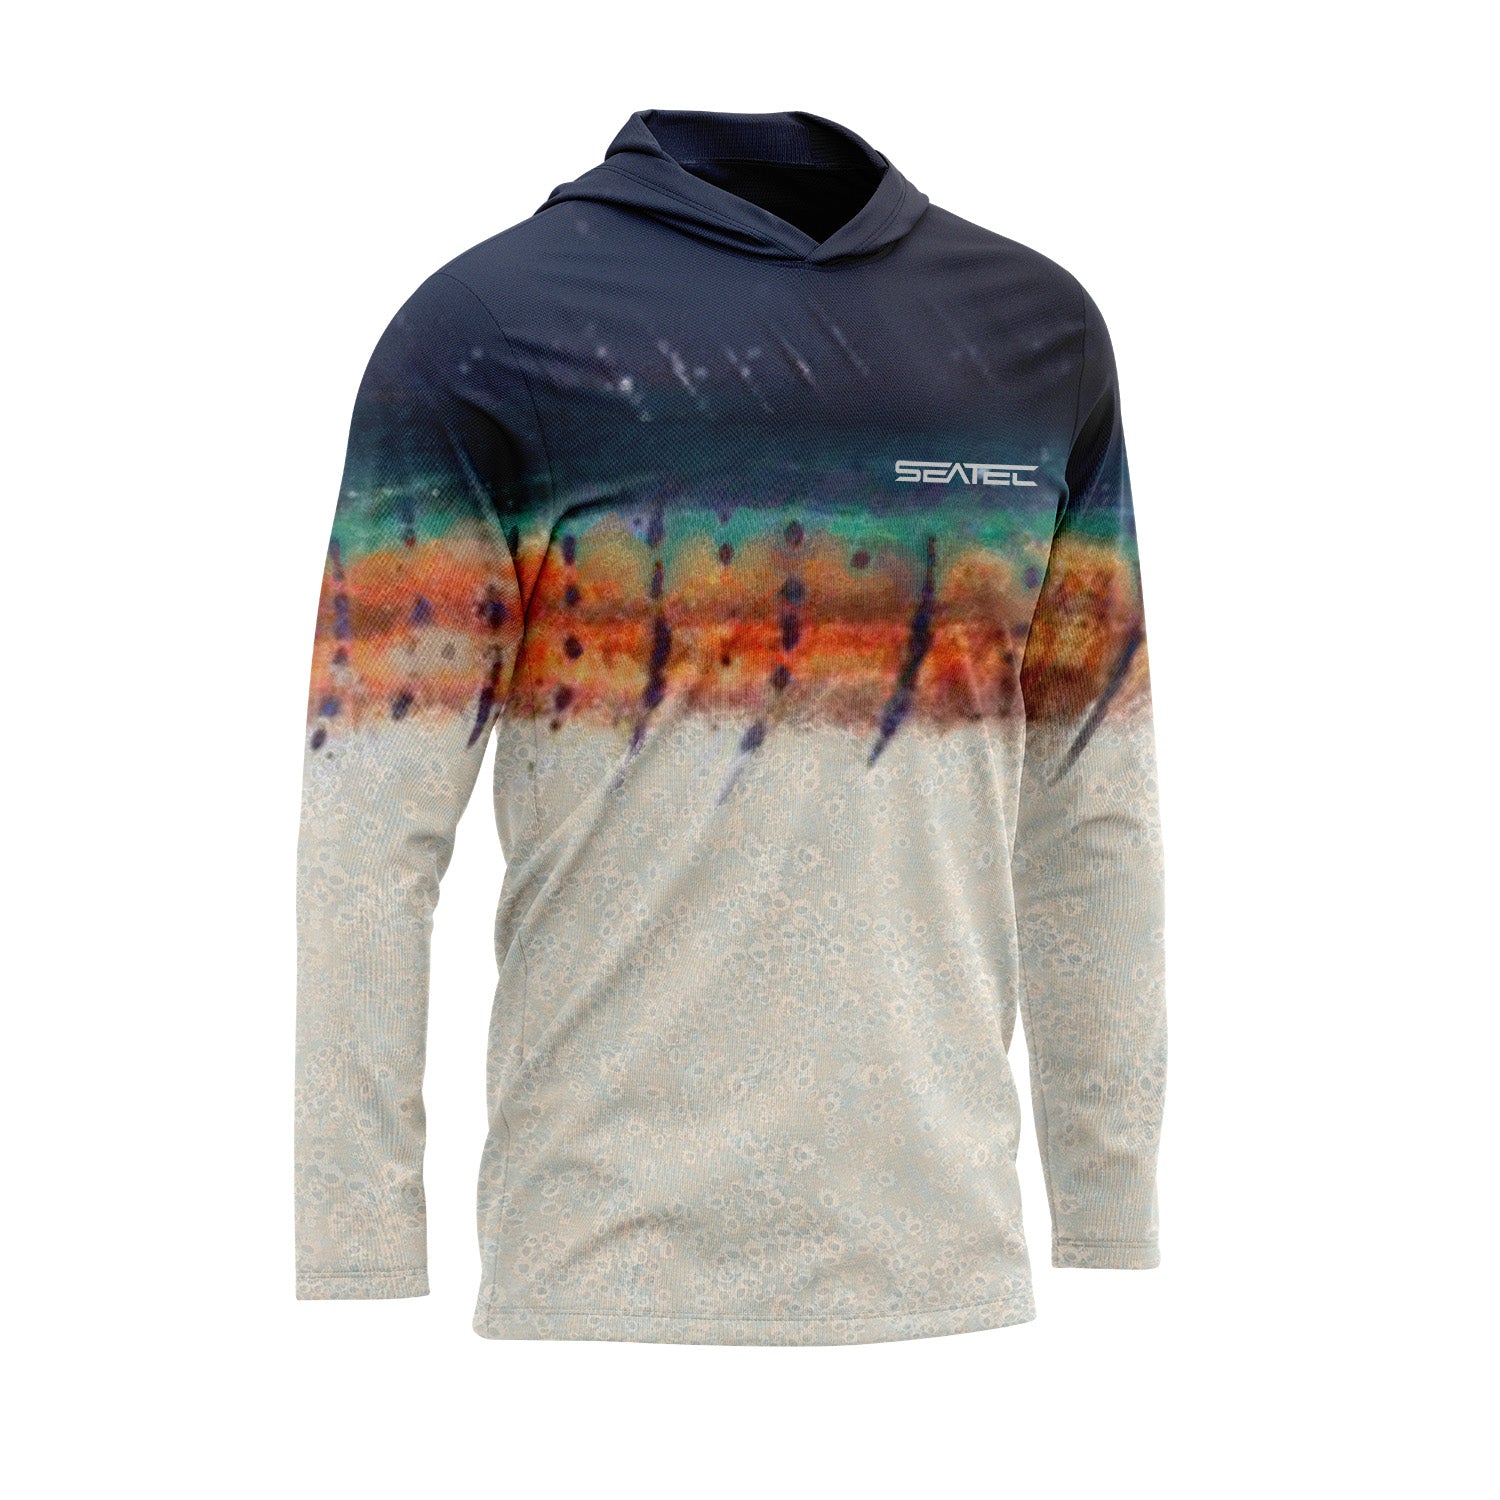 Sailfish - Men's Hooded Performance Fishing Shirt - Best Sun Shirts - Multi-Seasonal - UPF 50+ - Long Sleeve Fishing Shirt - XS